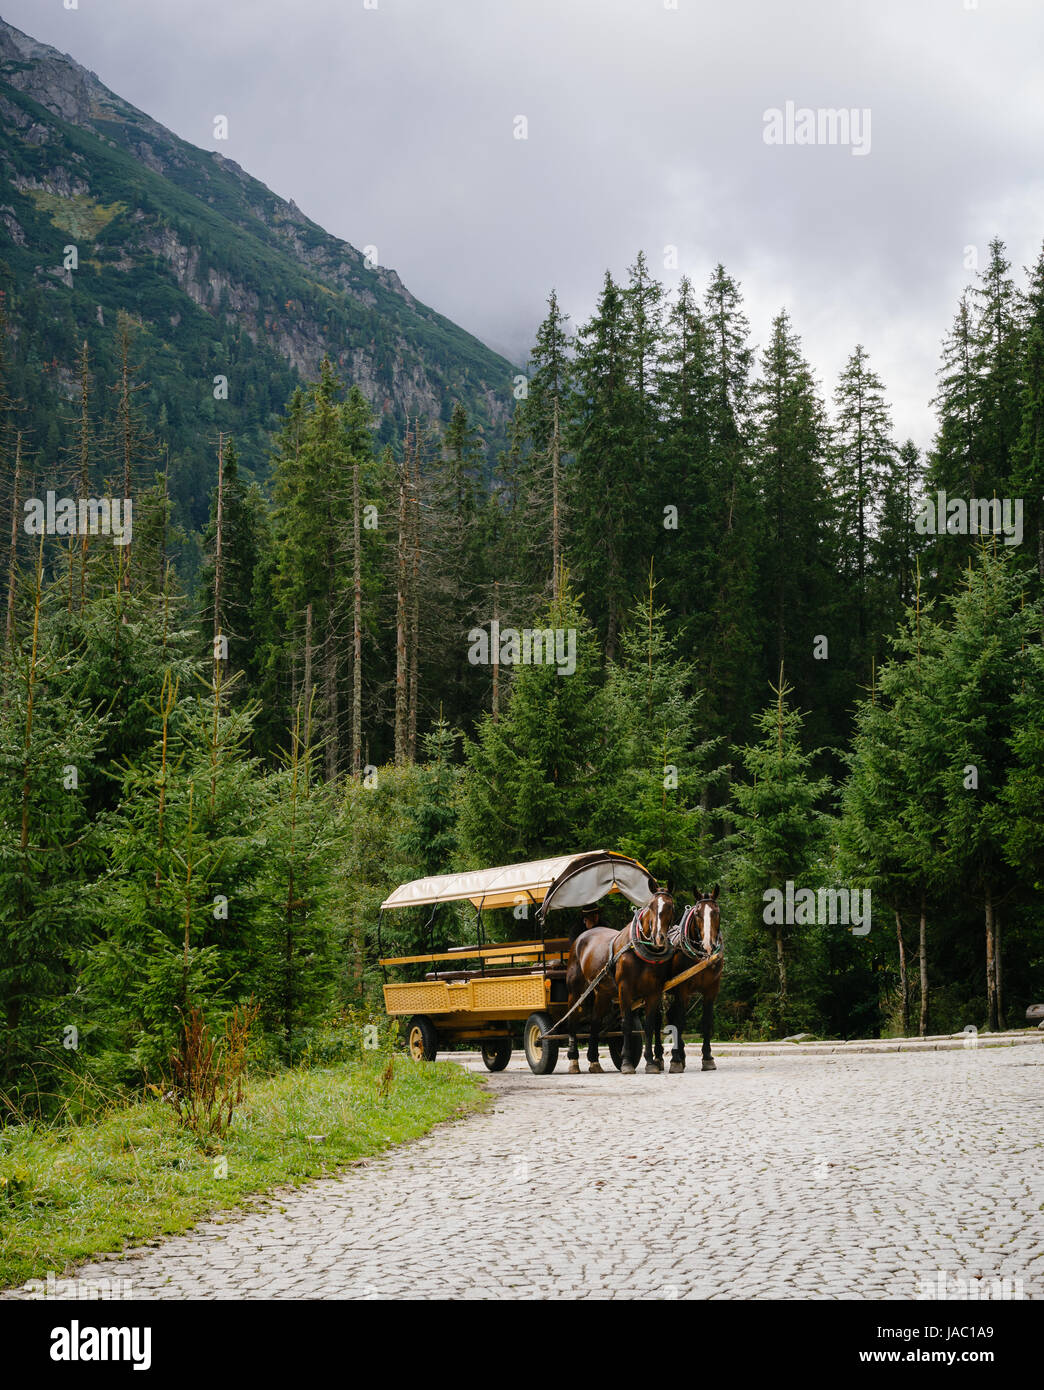 Authentic horse-drawn carriage on the way to Morskie Oko lake, High Tatras, Poland Stock Photo